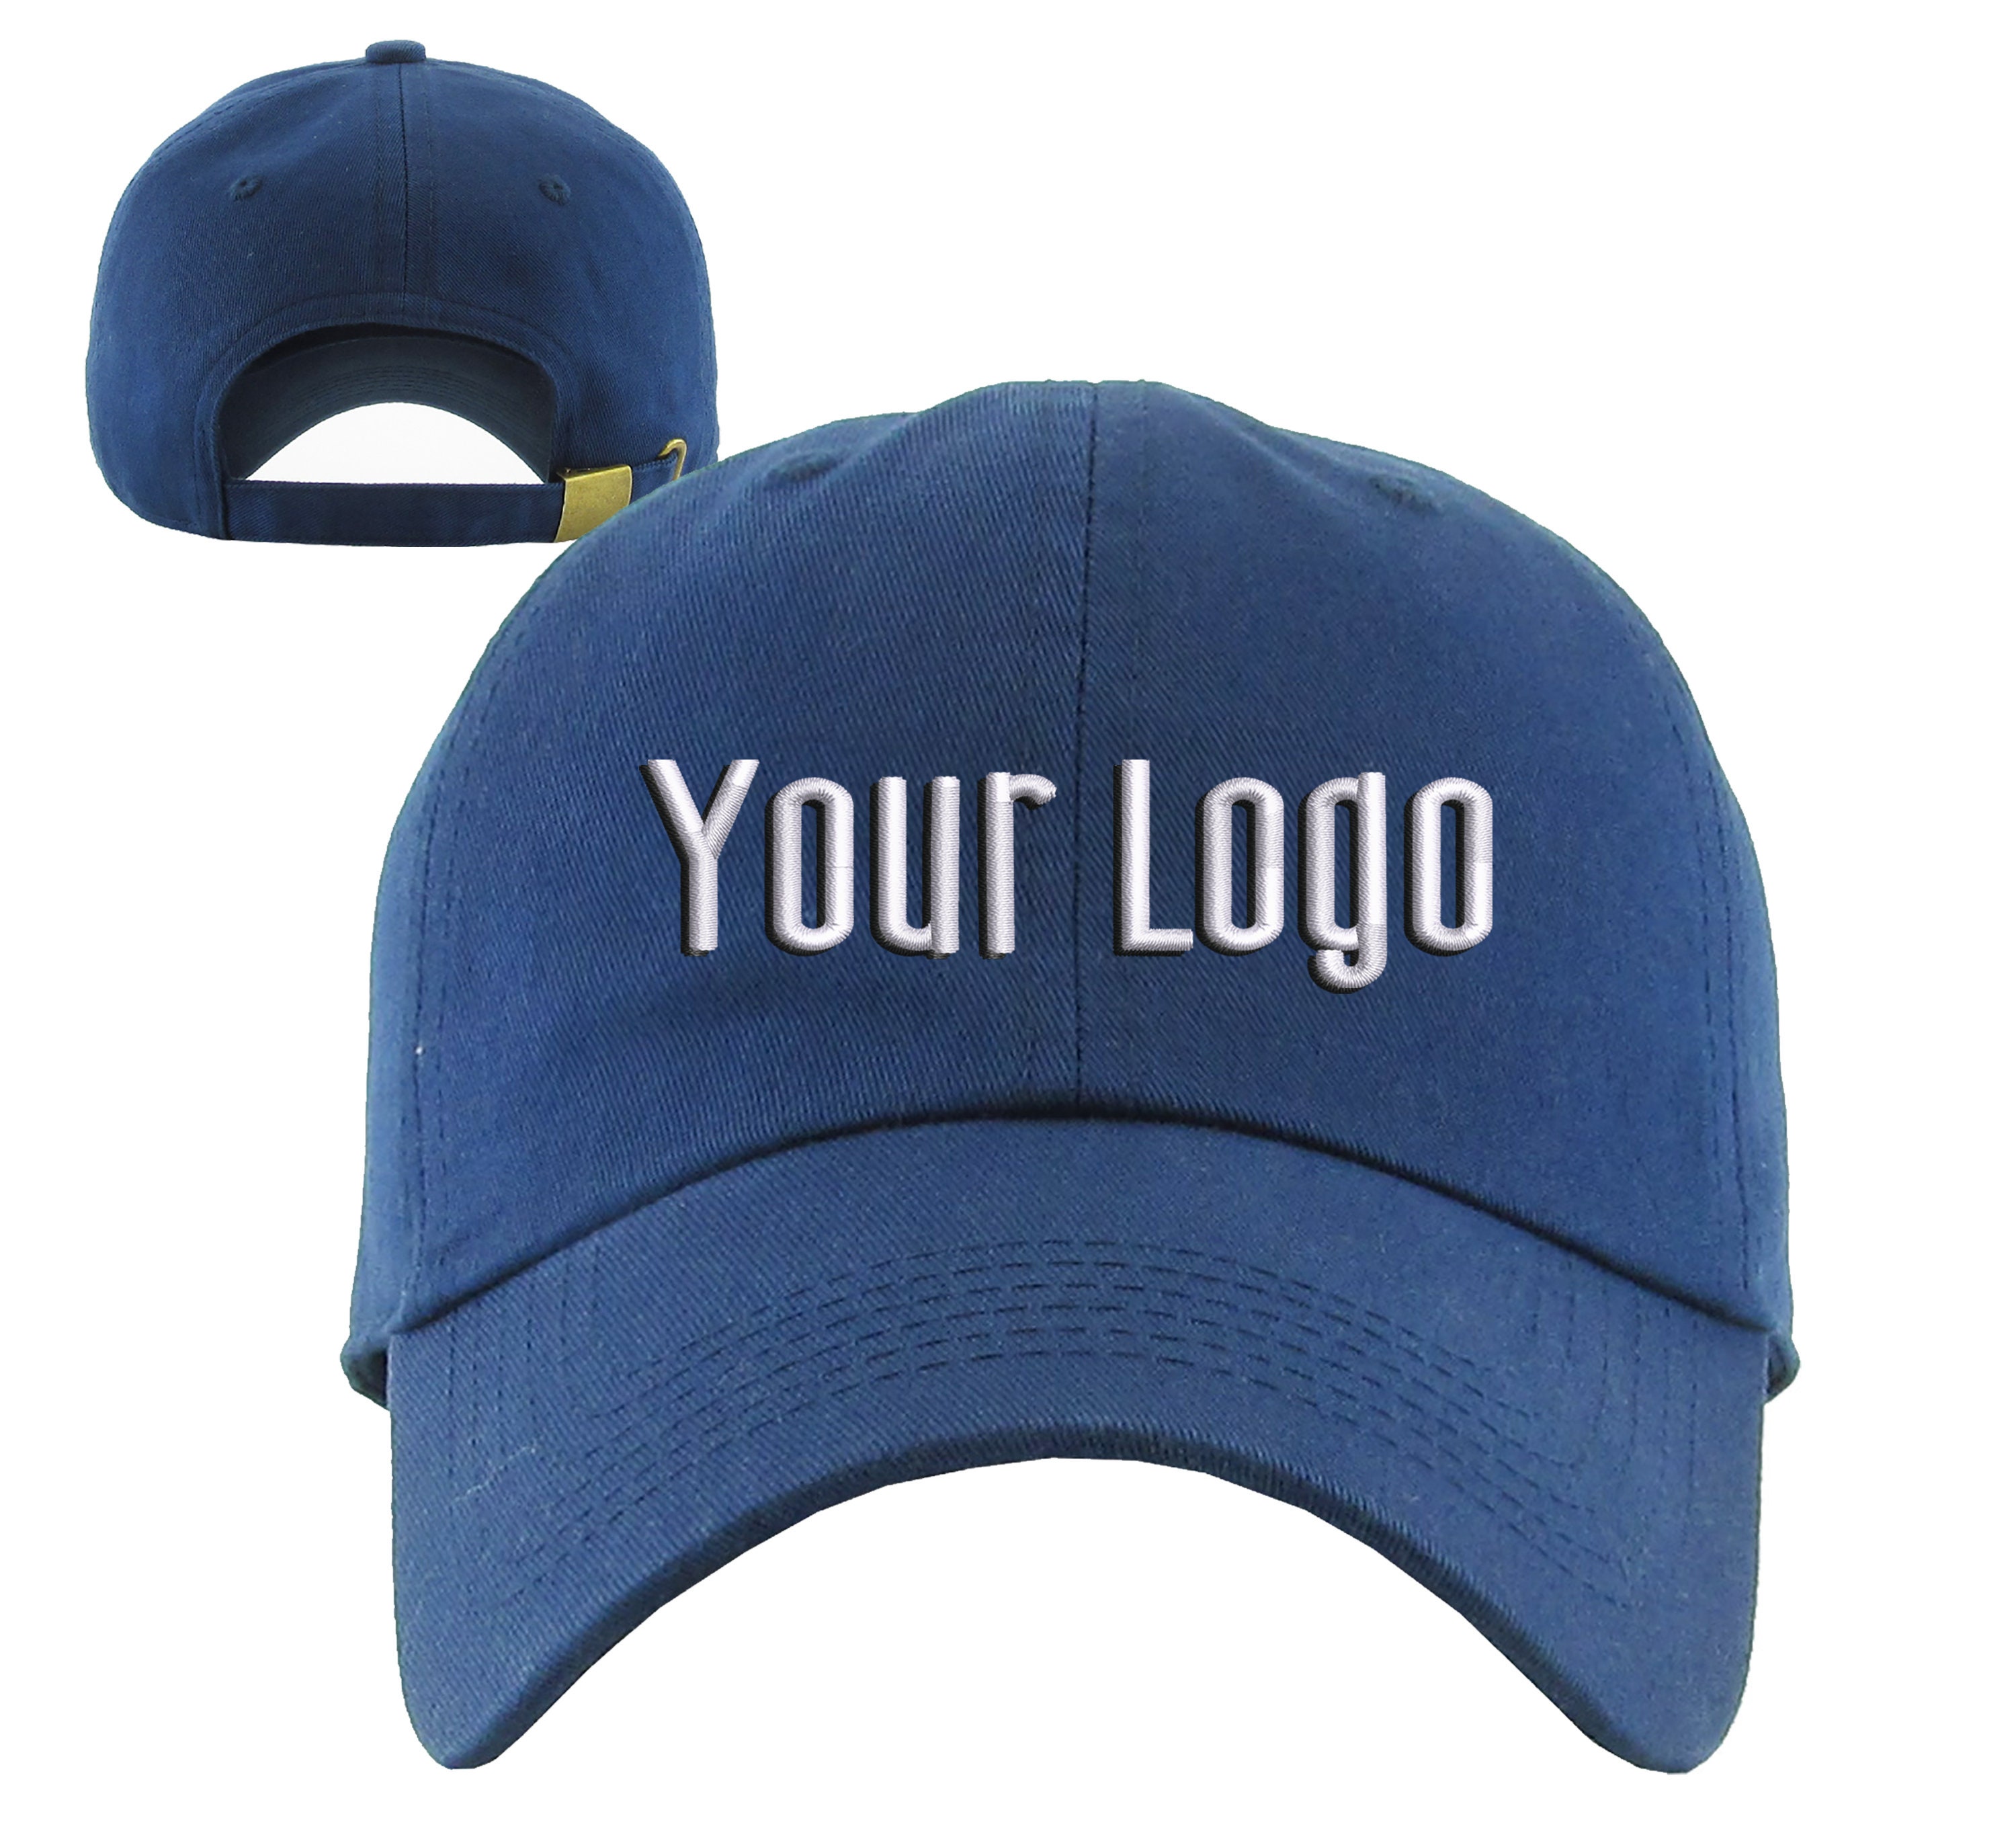 Baseball Hats, Etsy Low Baseball Australia Teams, Monogram KB4014, Hats, Custom Embroidery Cap Personalized. Business, Cotton - Hats, Profile